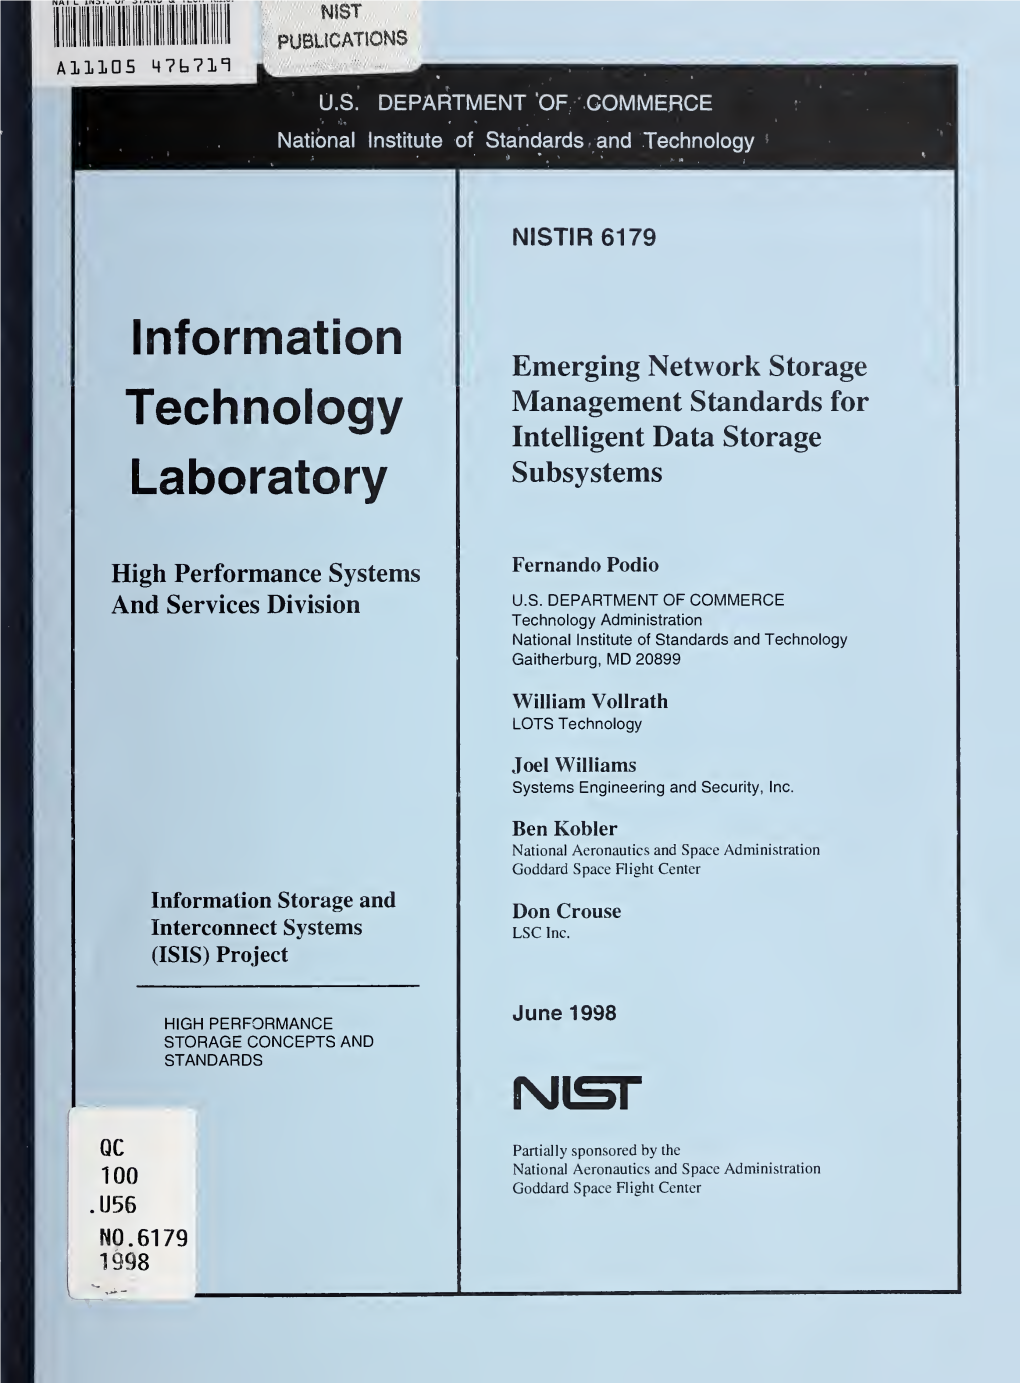 Emerging Network Storage Management Standards for Intelligent Data Storage Subsystems